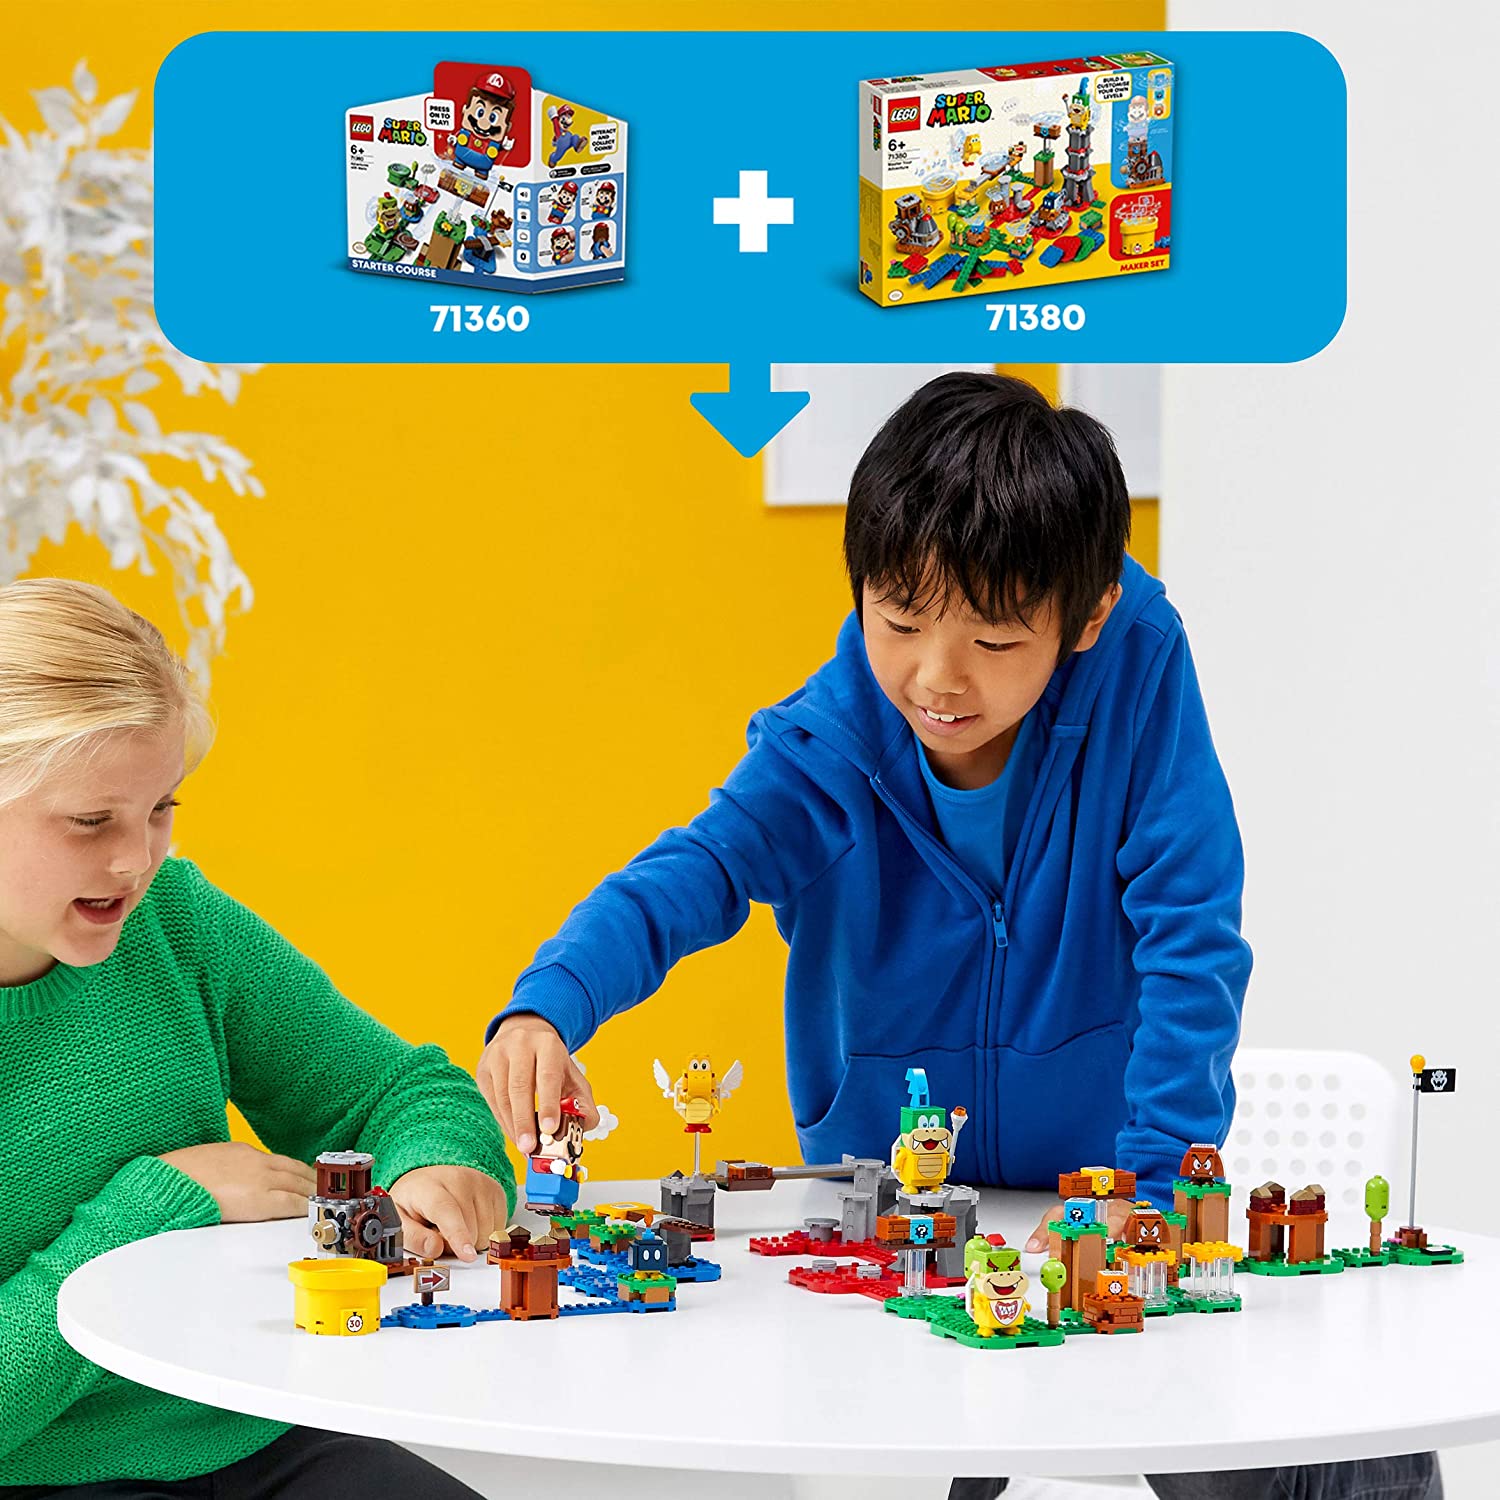 LEGO® Super Mario™ Costruisci la tua avventura - Maker Pack